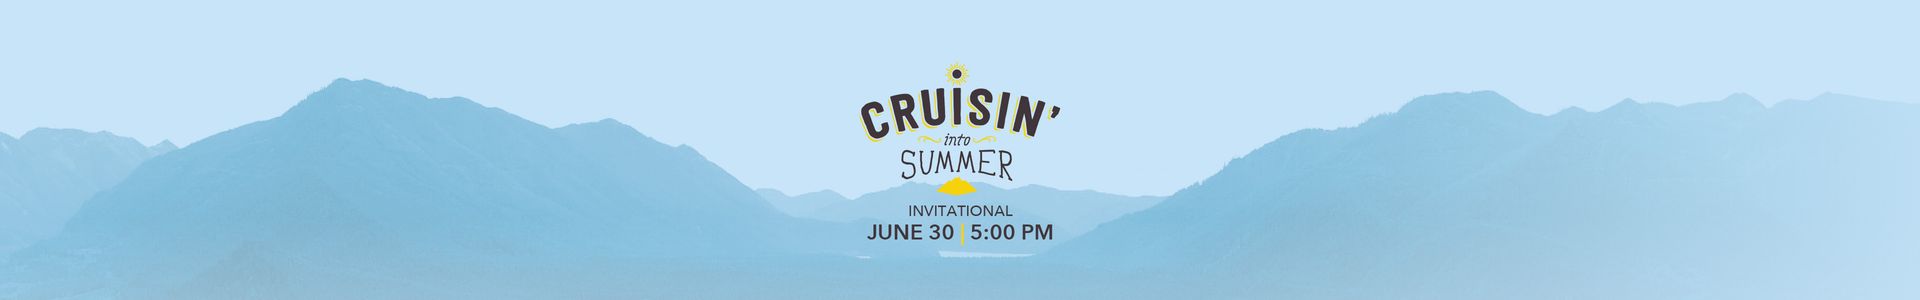 Cruisin' Into Summer INVITE ONLY